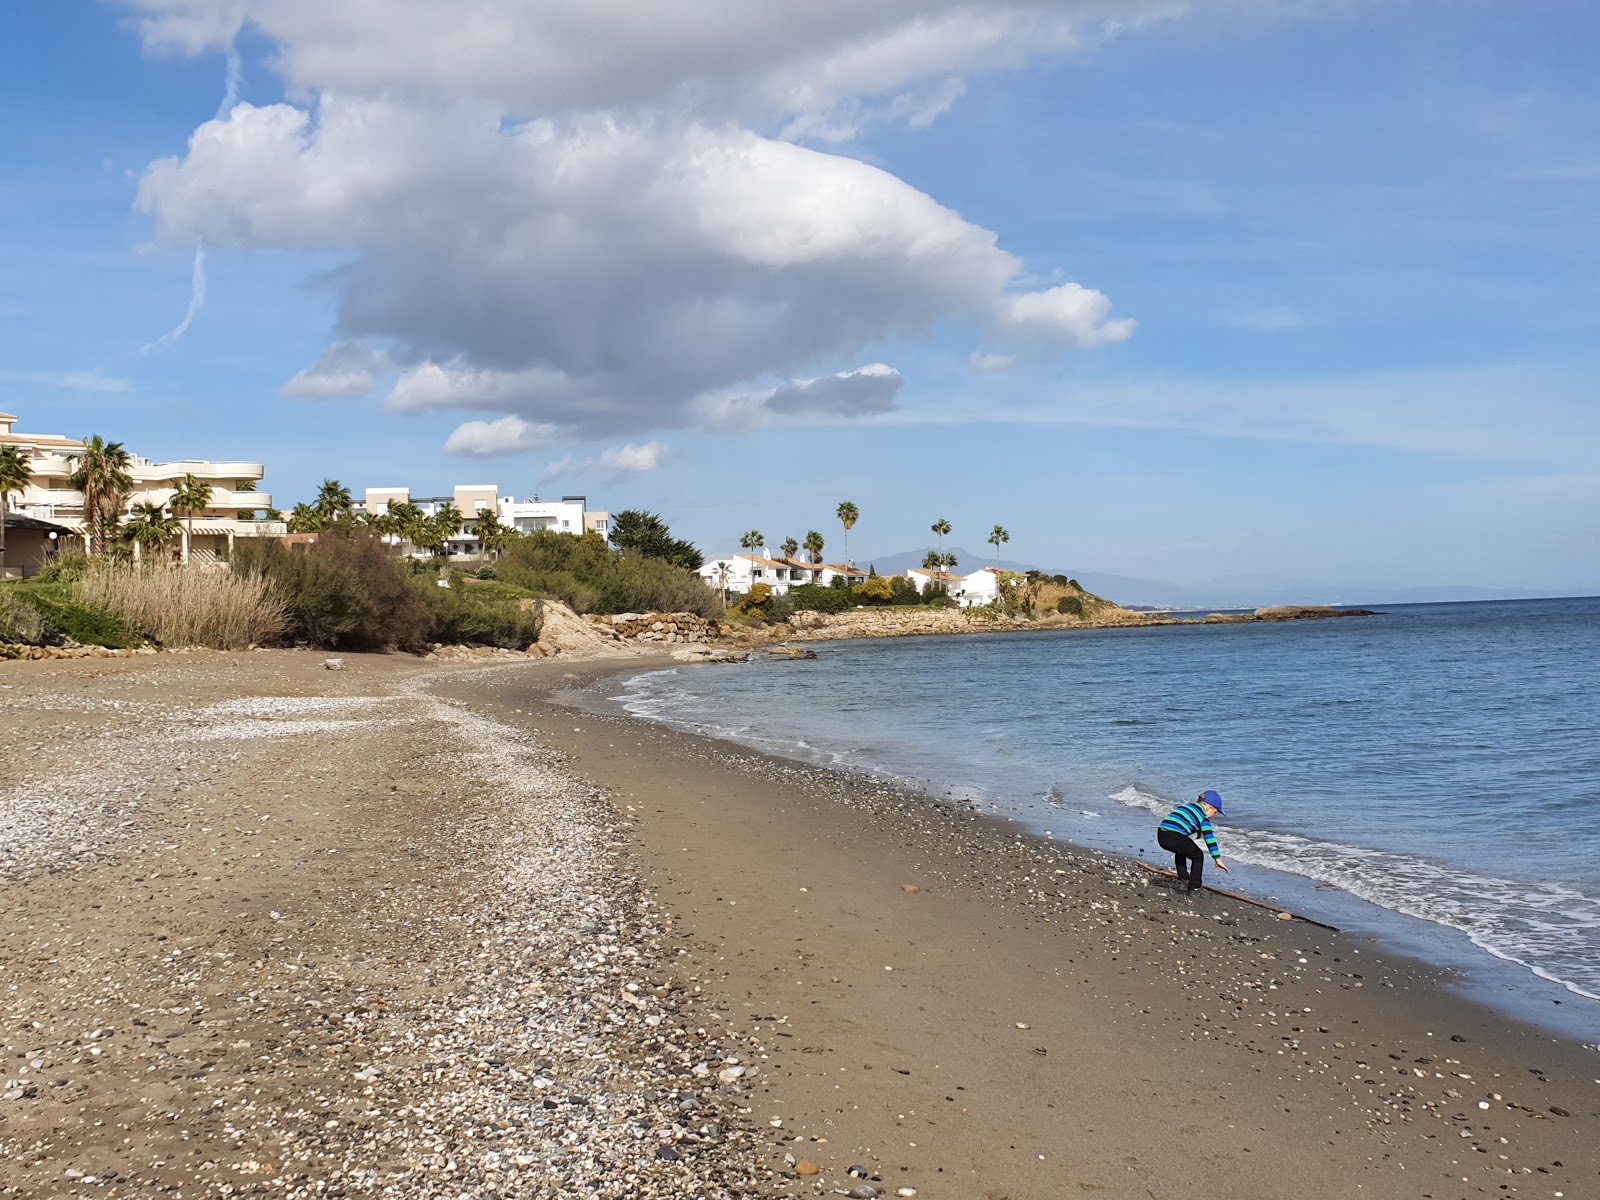 Playa de la Galera'in fotoğrafı geniş plaj ile birlikte